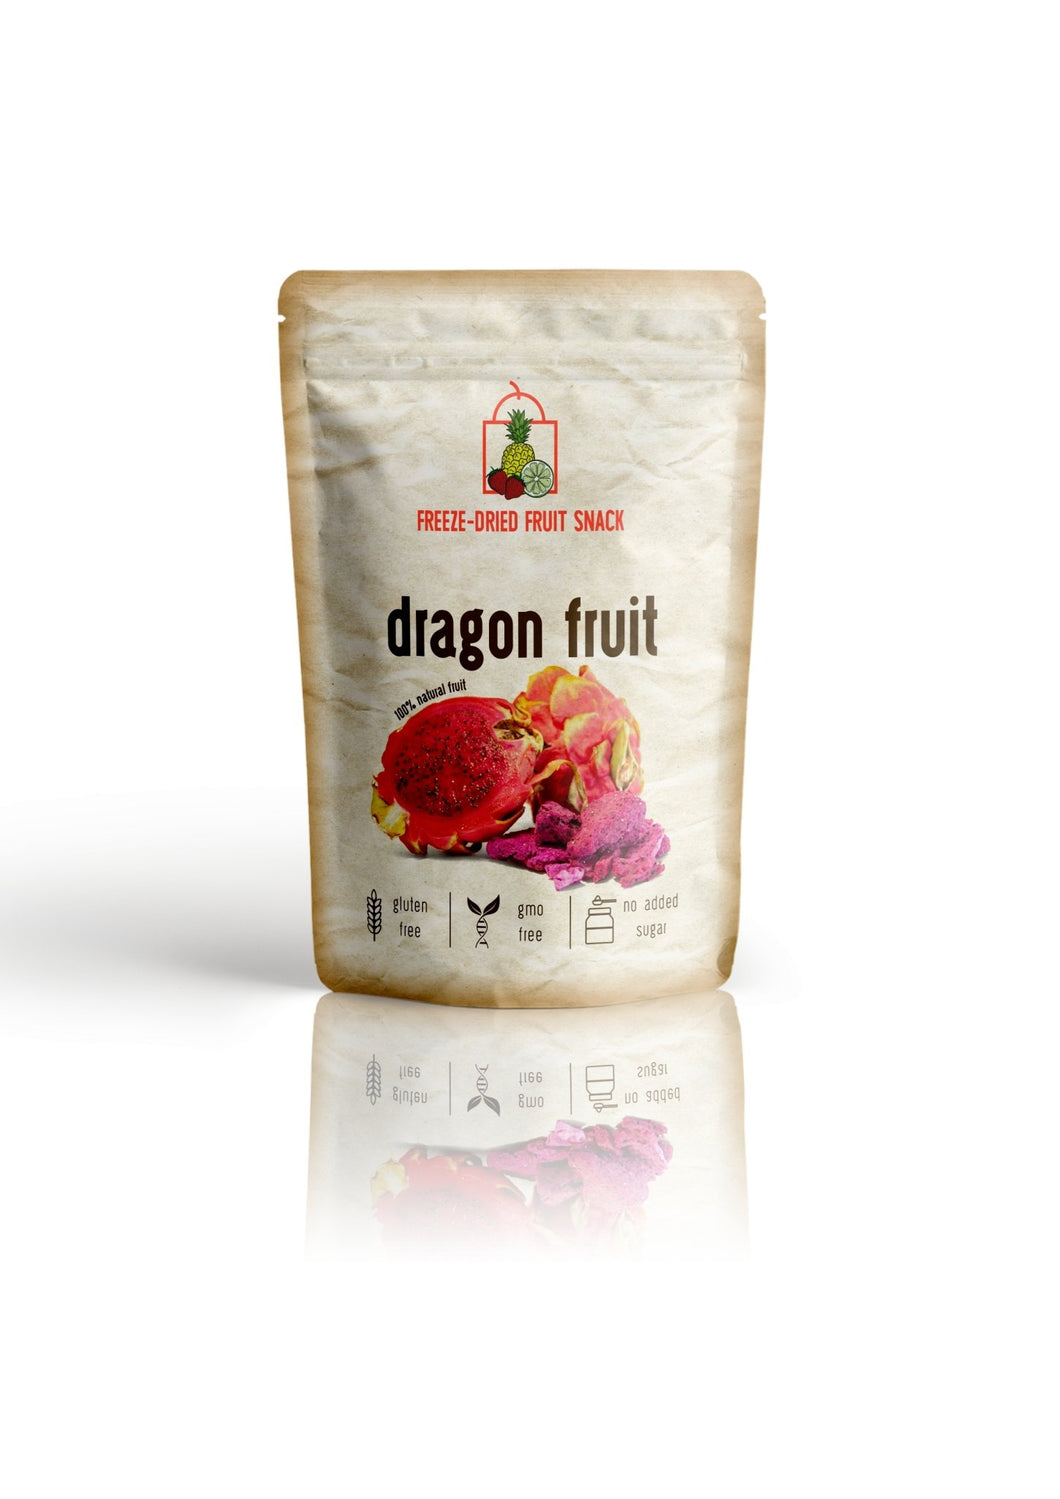 The Rotten Fruit Box - Freeze Dried Dragon Fruit Snack by The Rotten Fruit Box - Farm2Me - carro-6366965 - 5600811500208 -